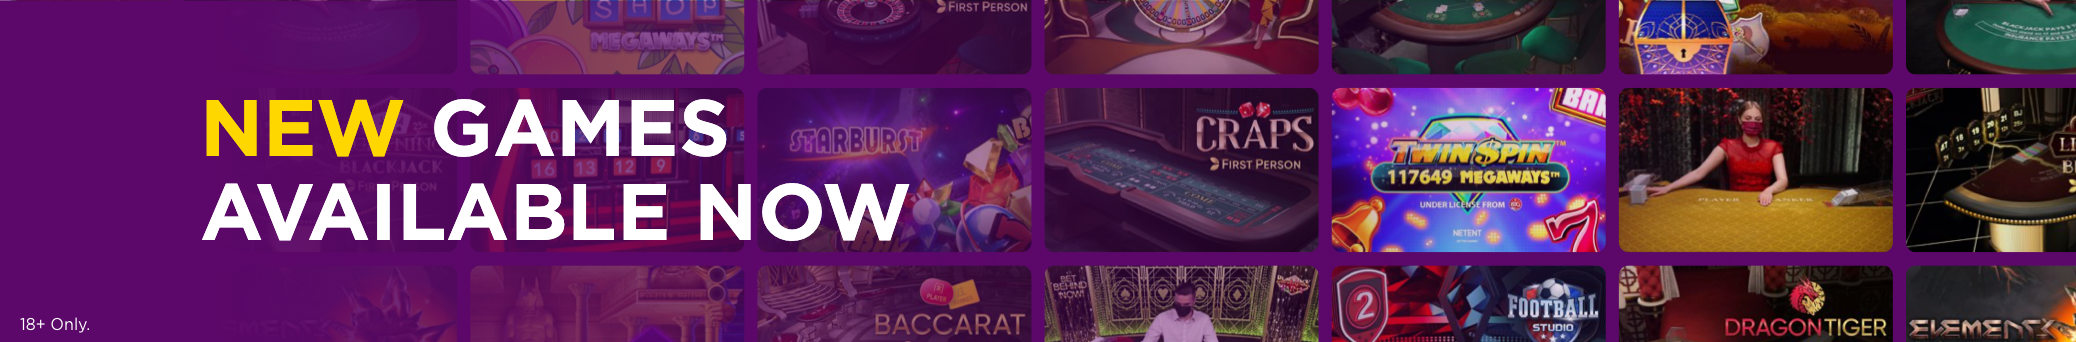 Jackpot party casino free app